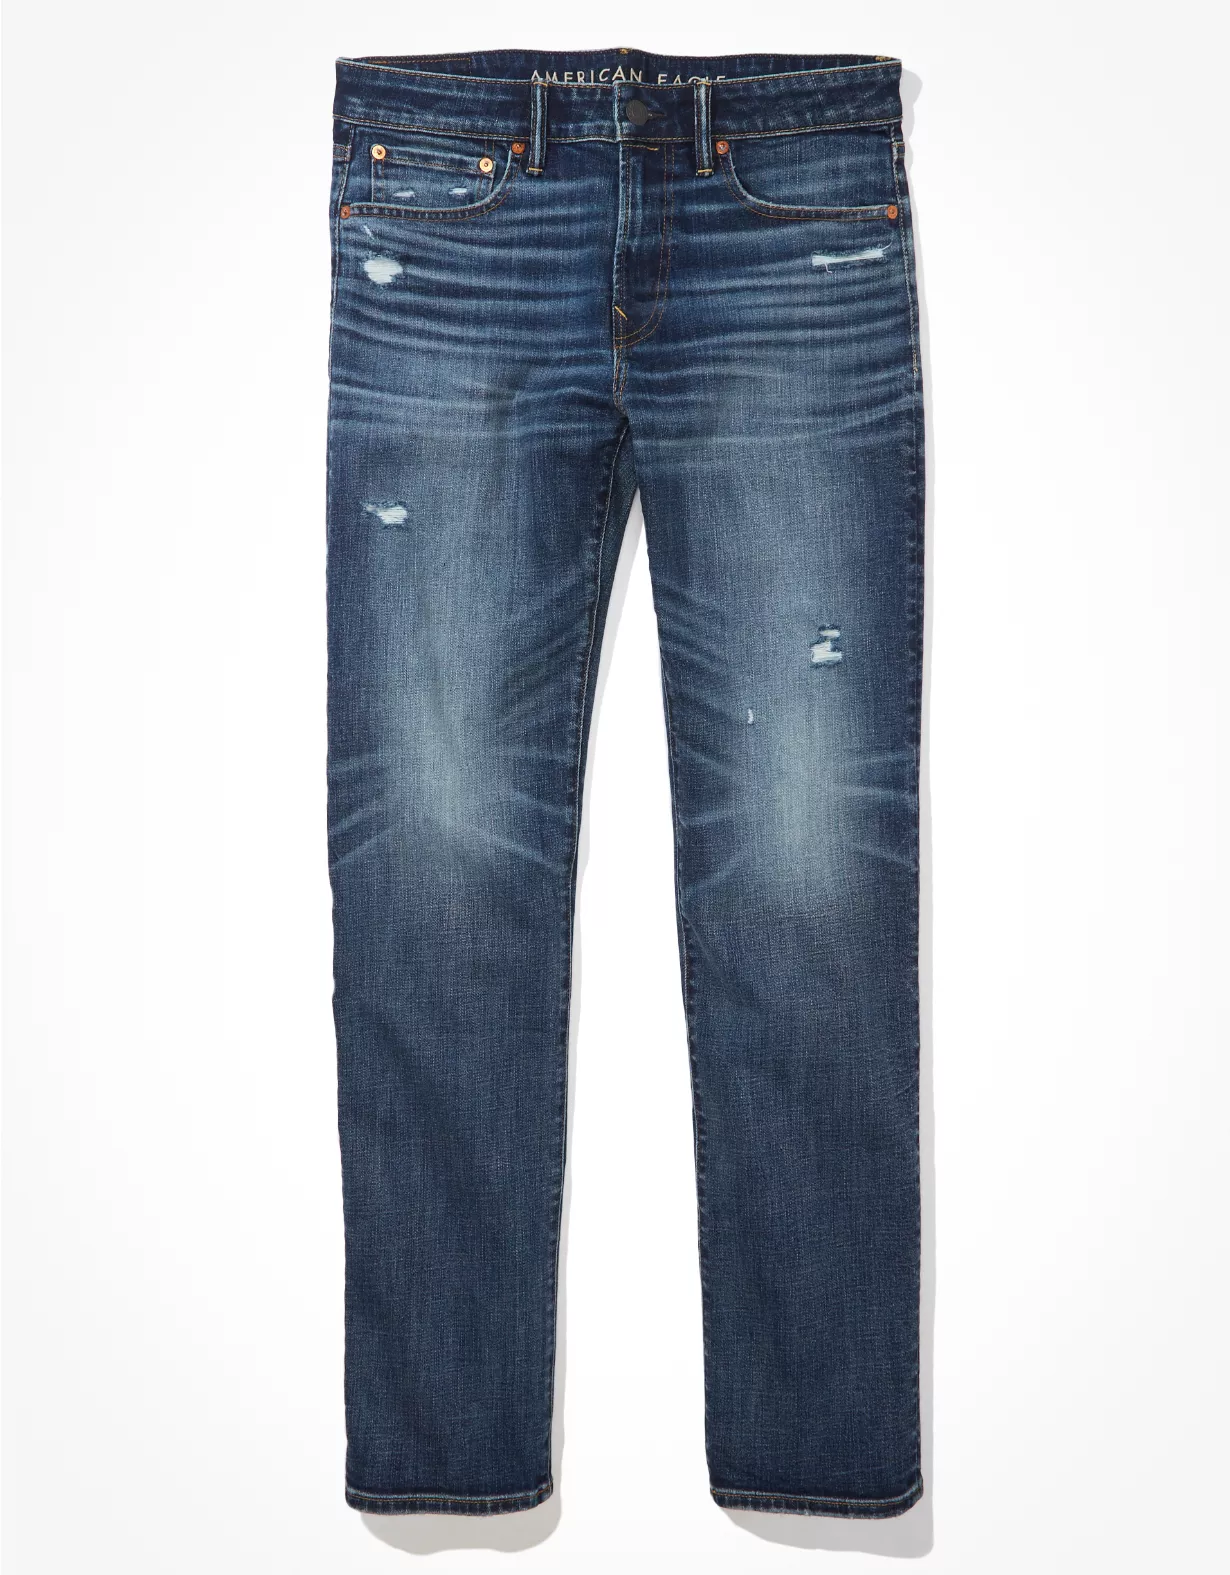 AE AirFlex+ Ripped Original Straight Jean